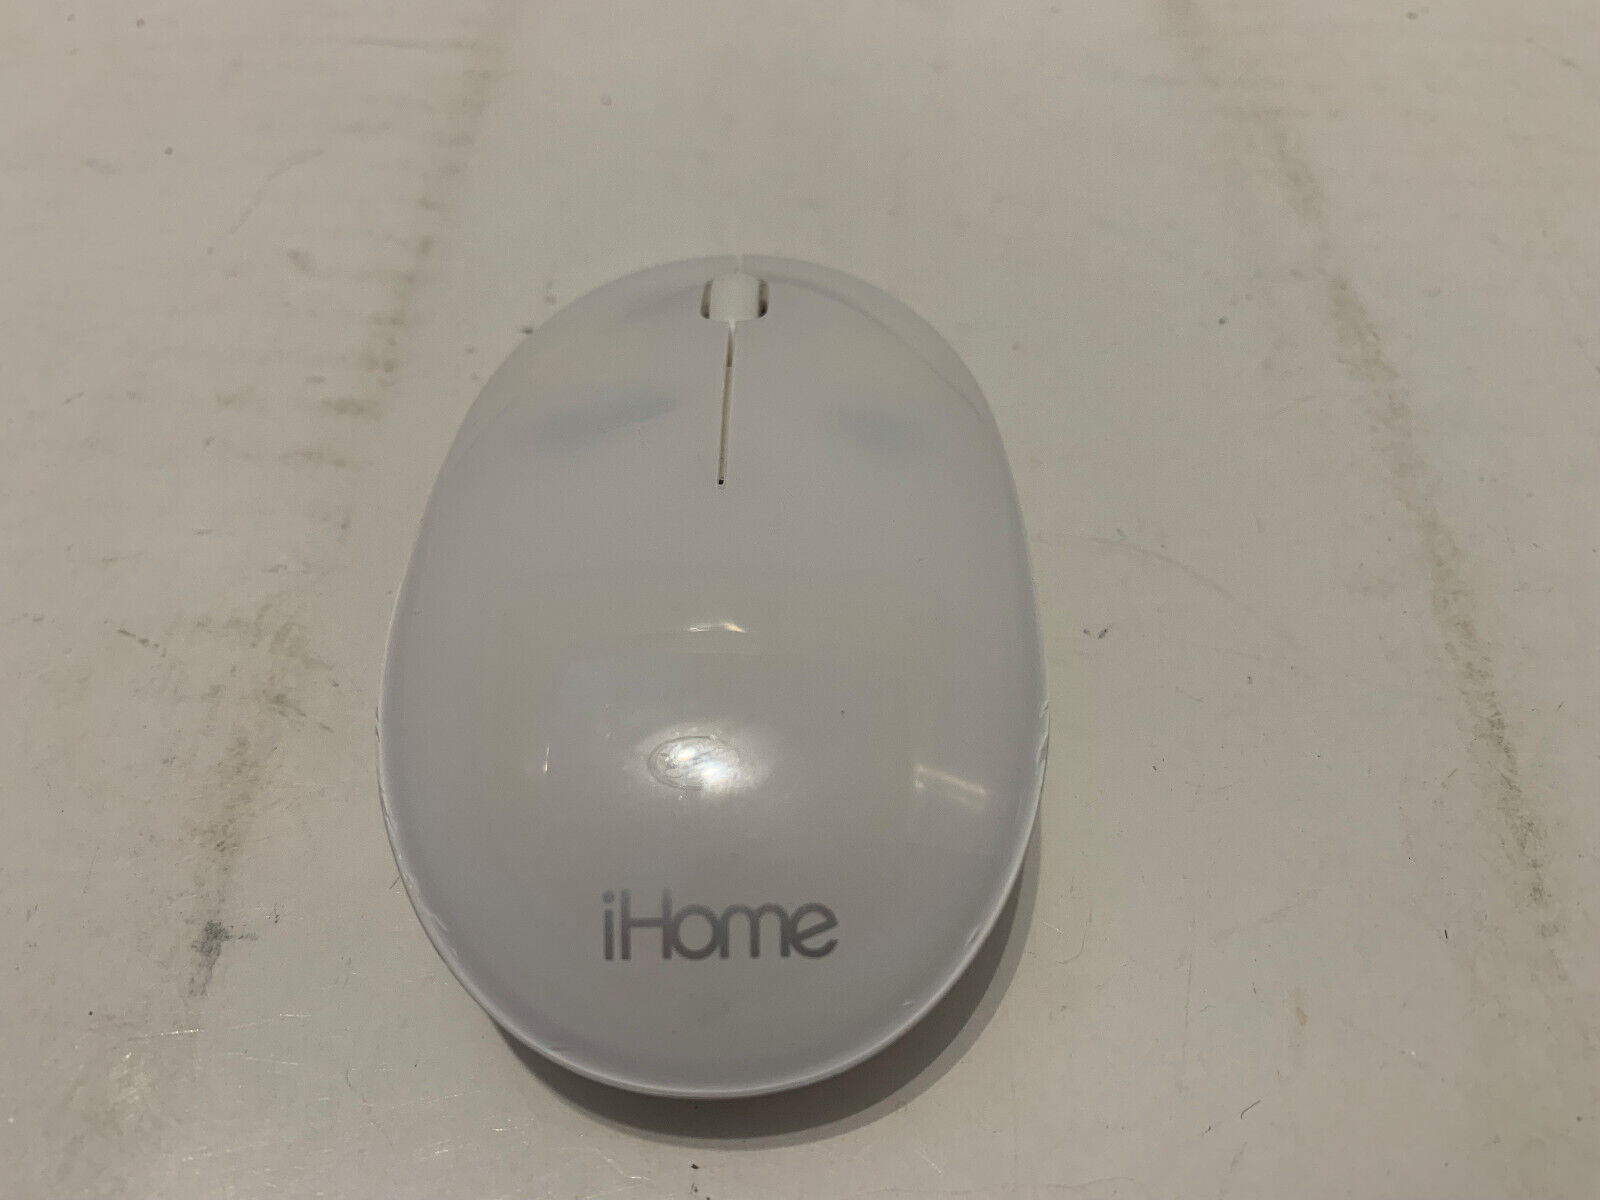 iHome Macintosh Mouse Bluetooth IMAC-M110W - White